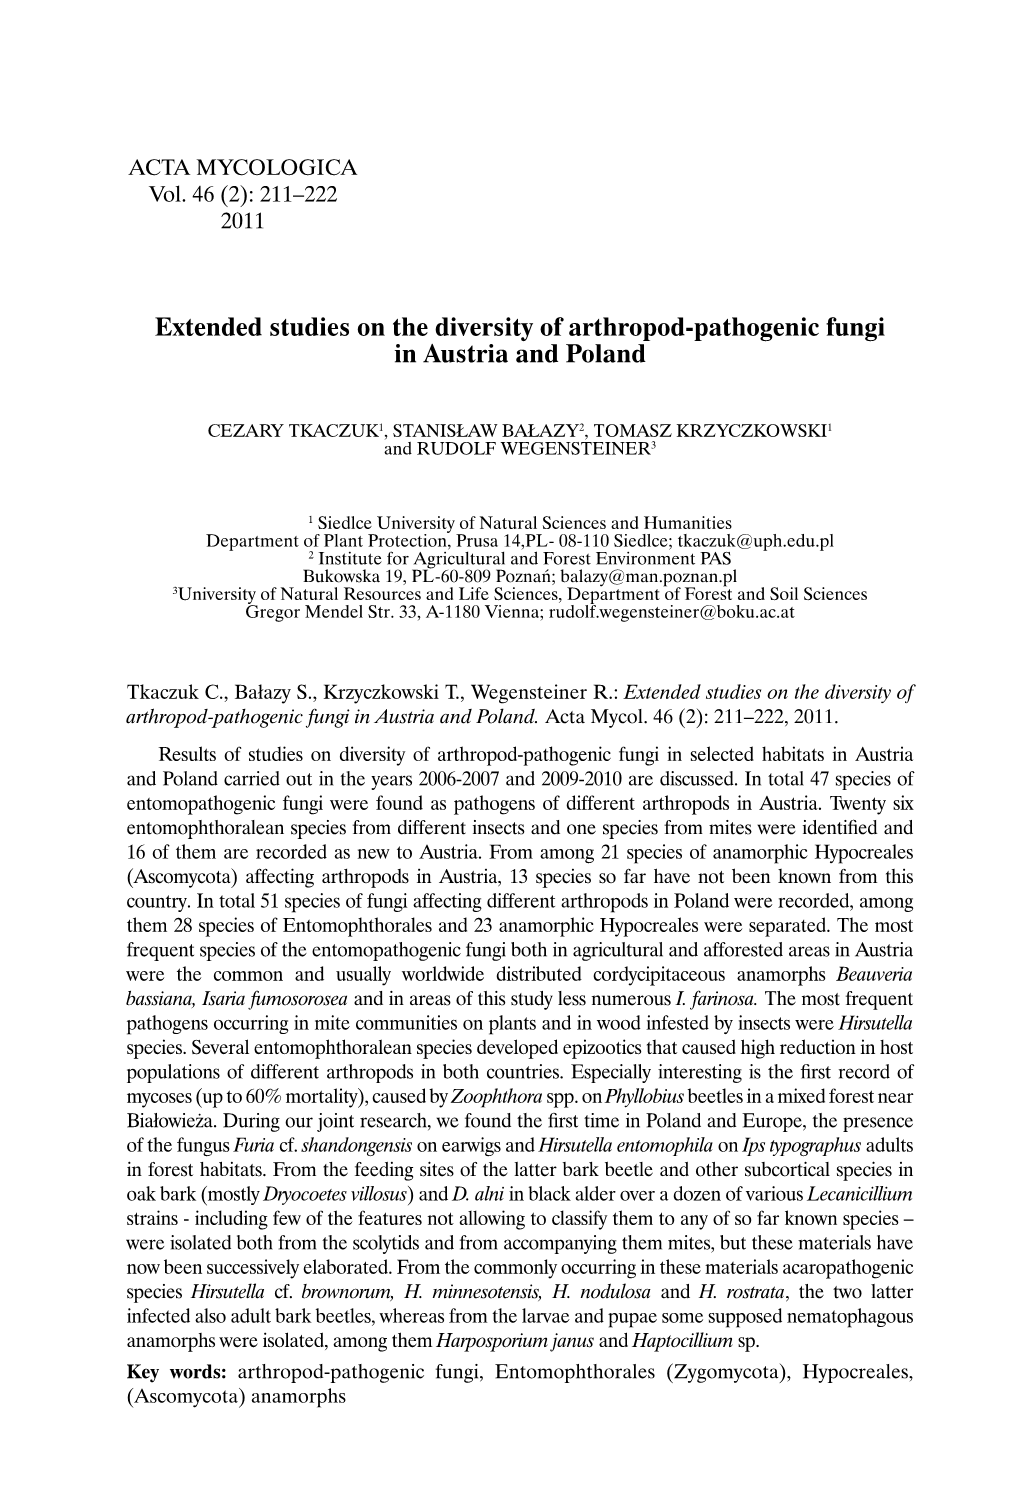 Extended Studies on the Diversity of Arthropod-Pathogenic Fungi in Austria and Poland